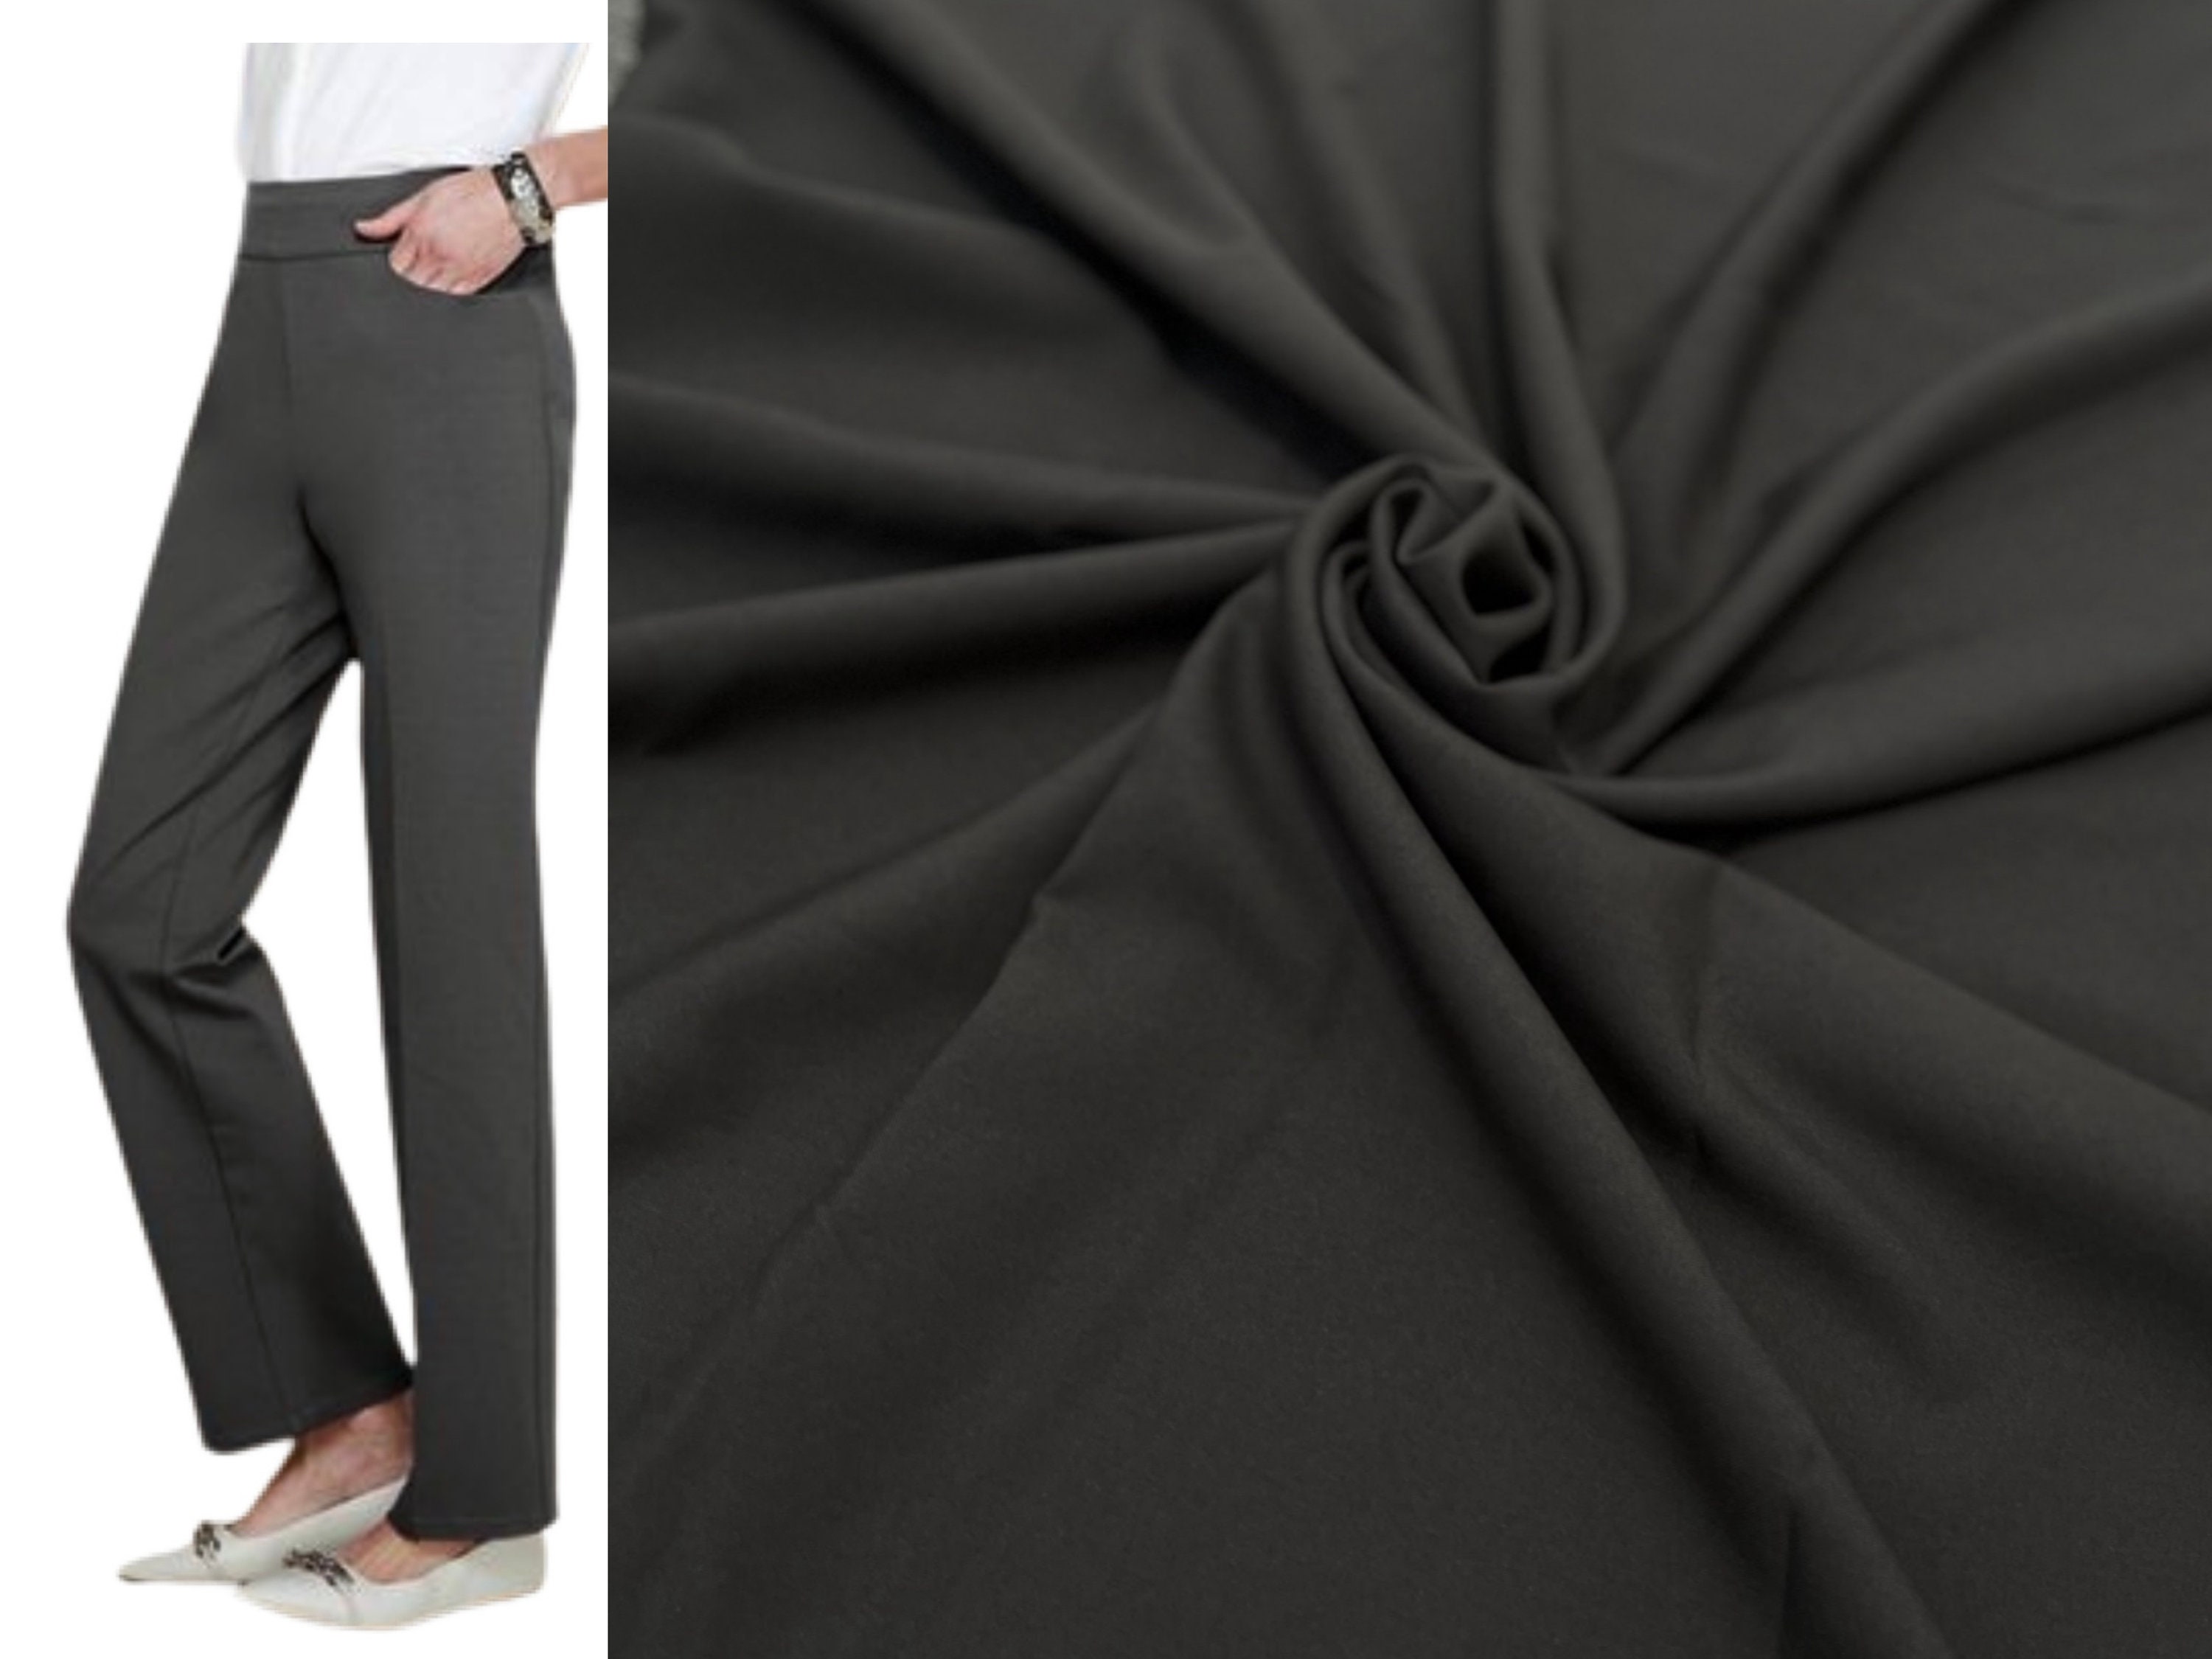 Scuba Crepe Fabric Grey 150cm - Abakhan